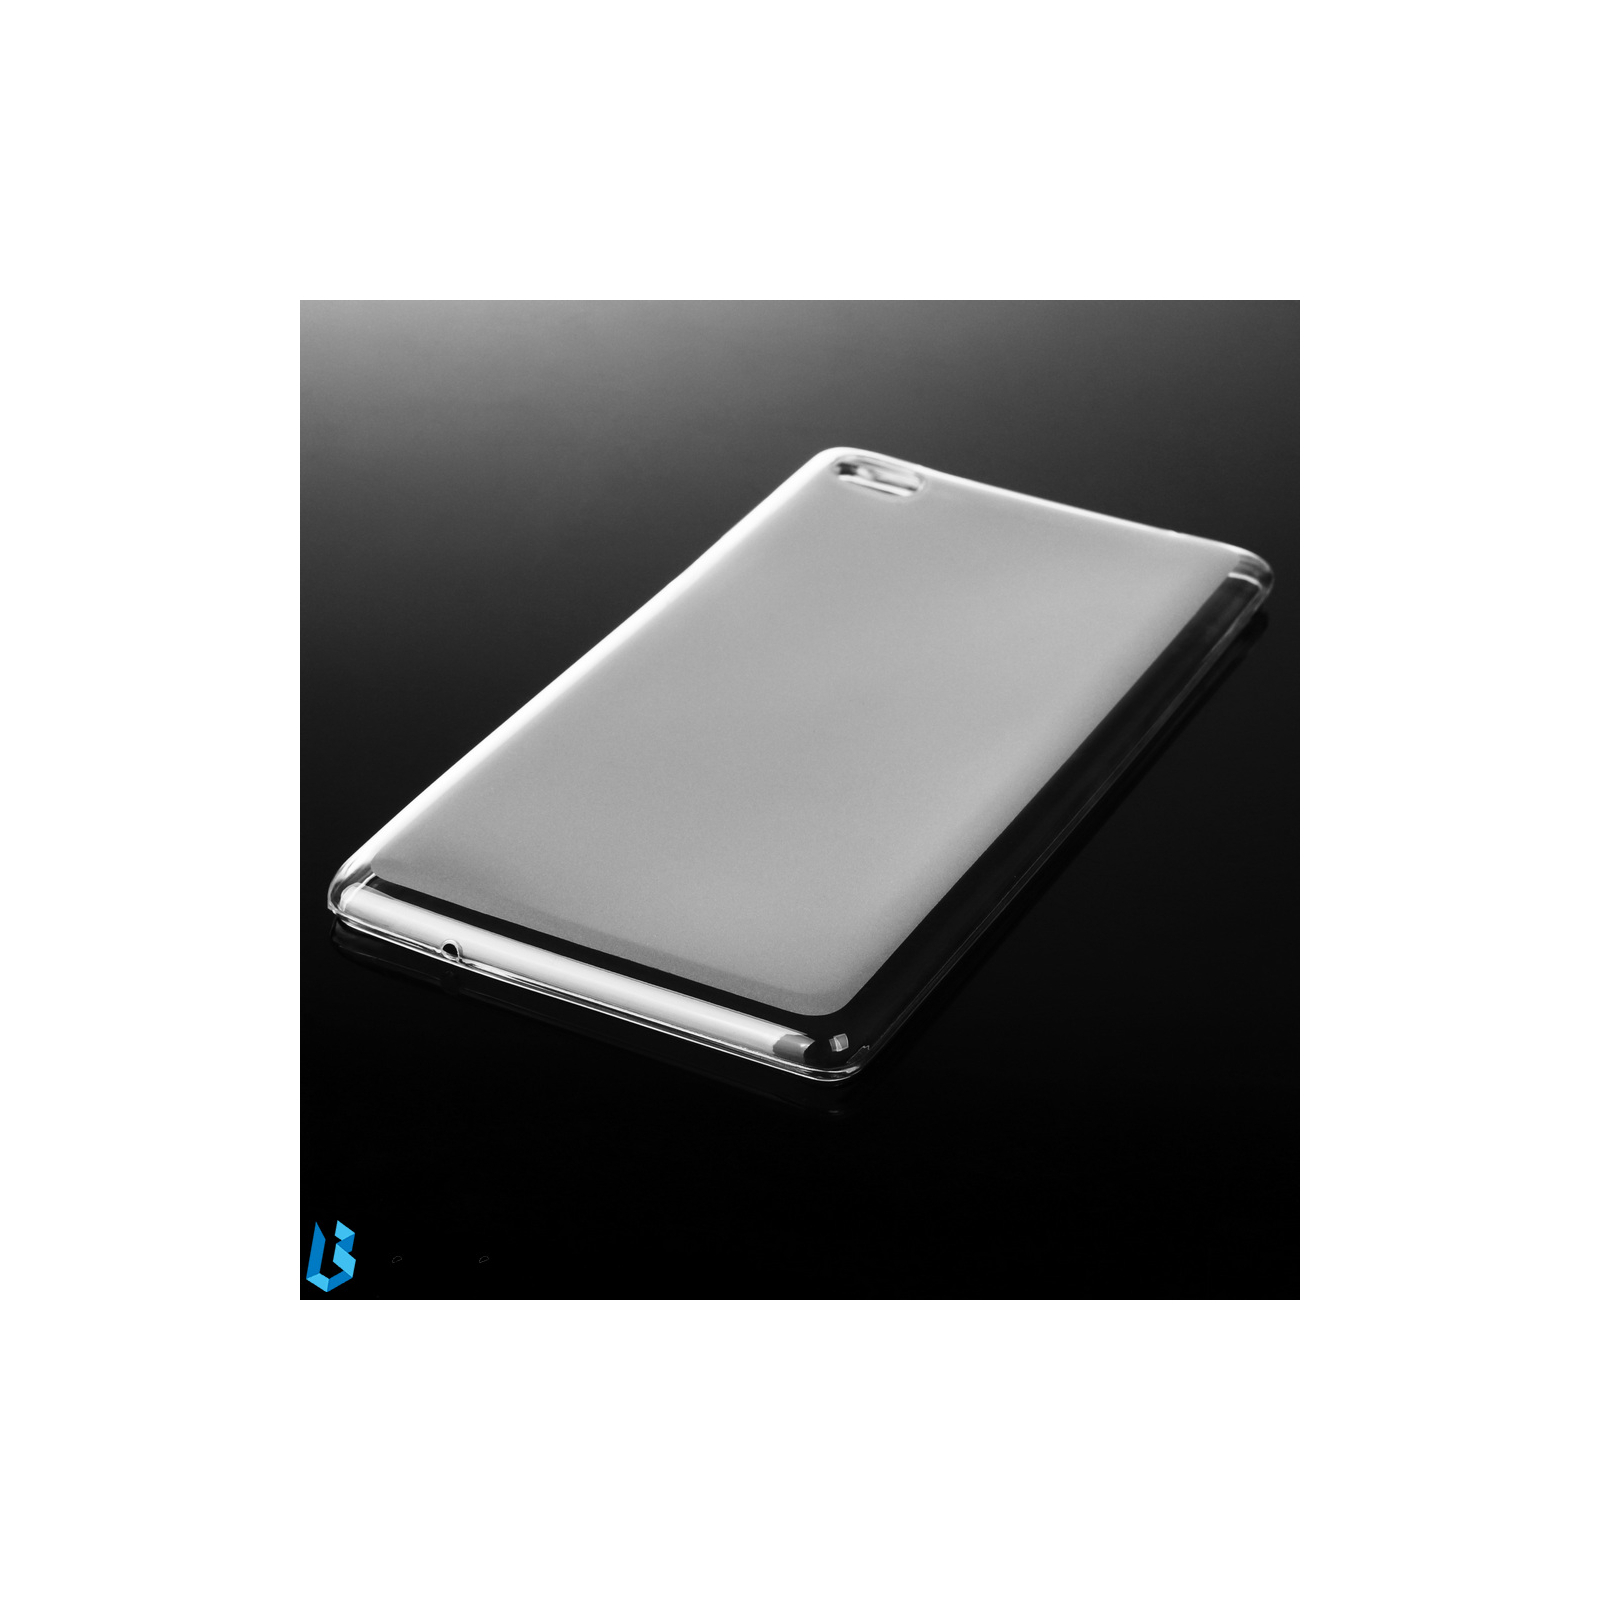 Чехол для планшета BeCover Lenovo Tab 4 7.0 TB-7504 Black (702162) изображение 3